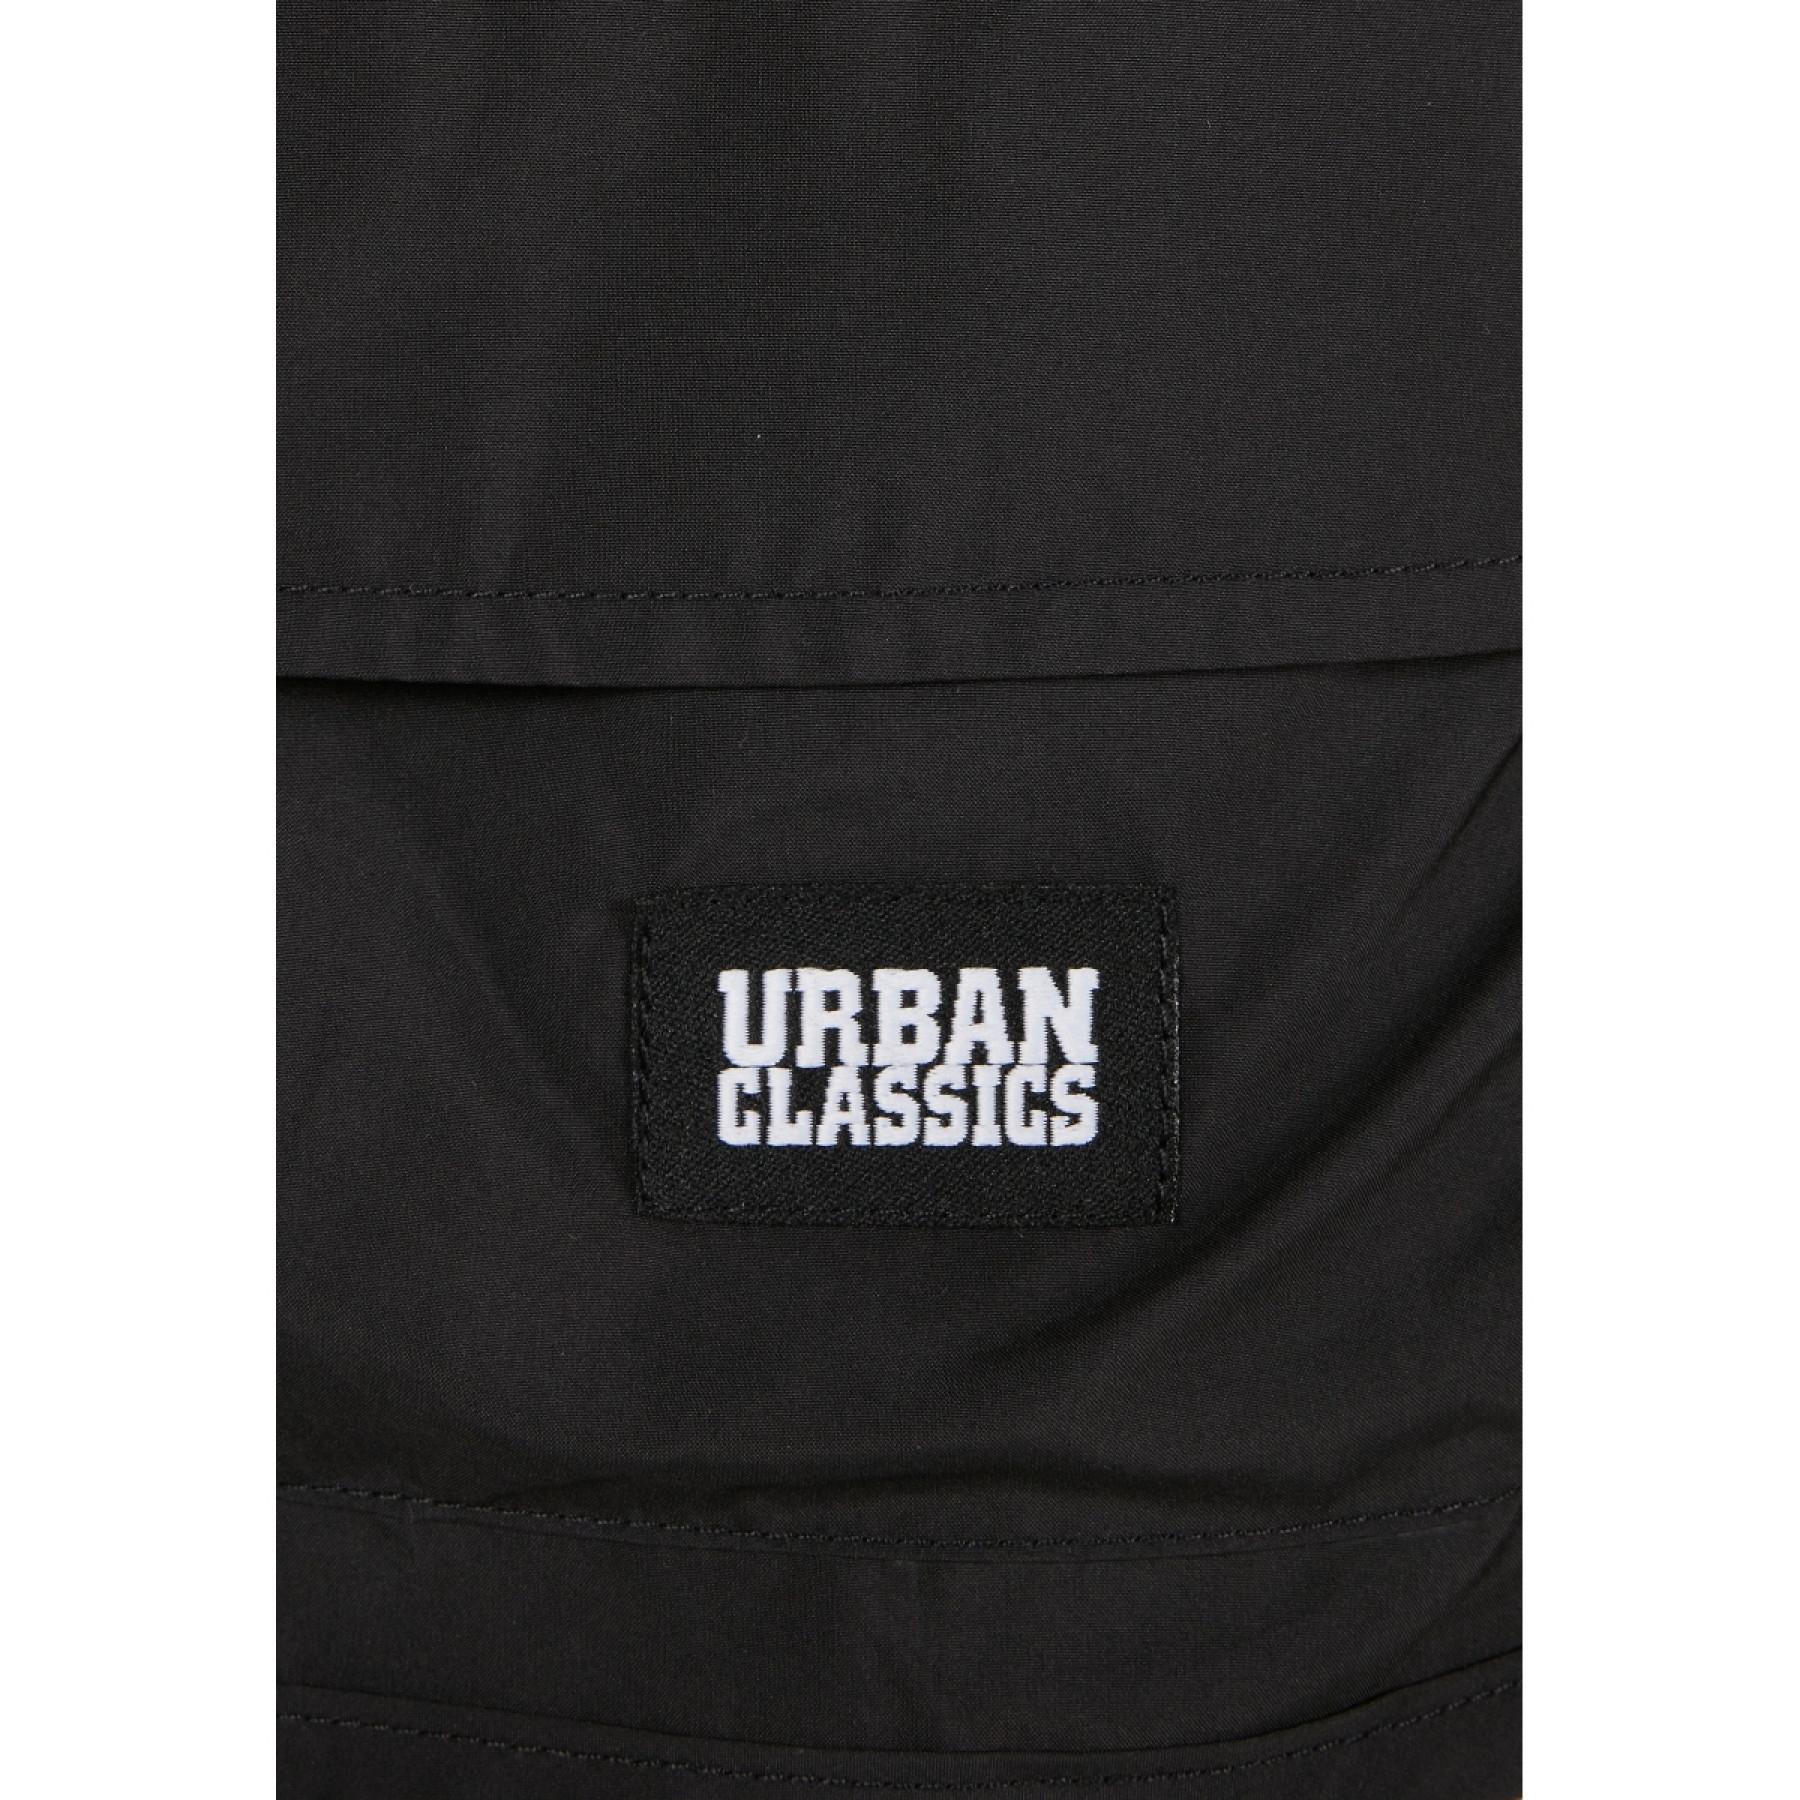 Jacket Urban Classics light pocket